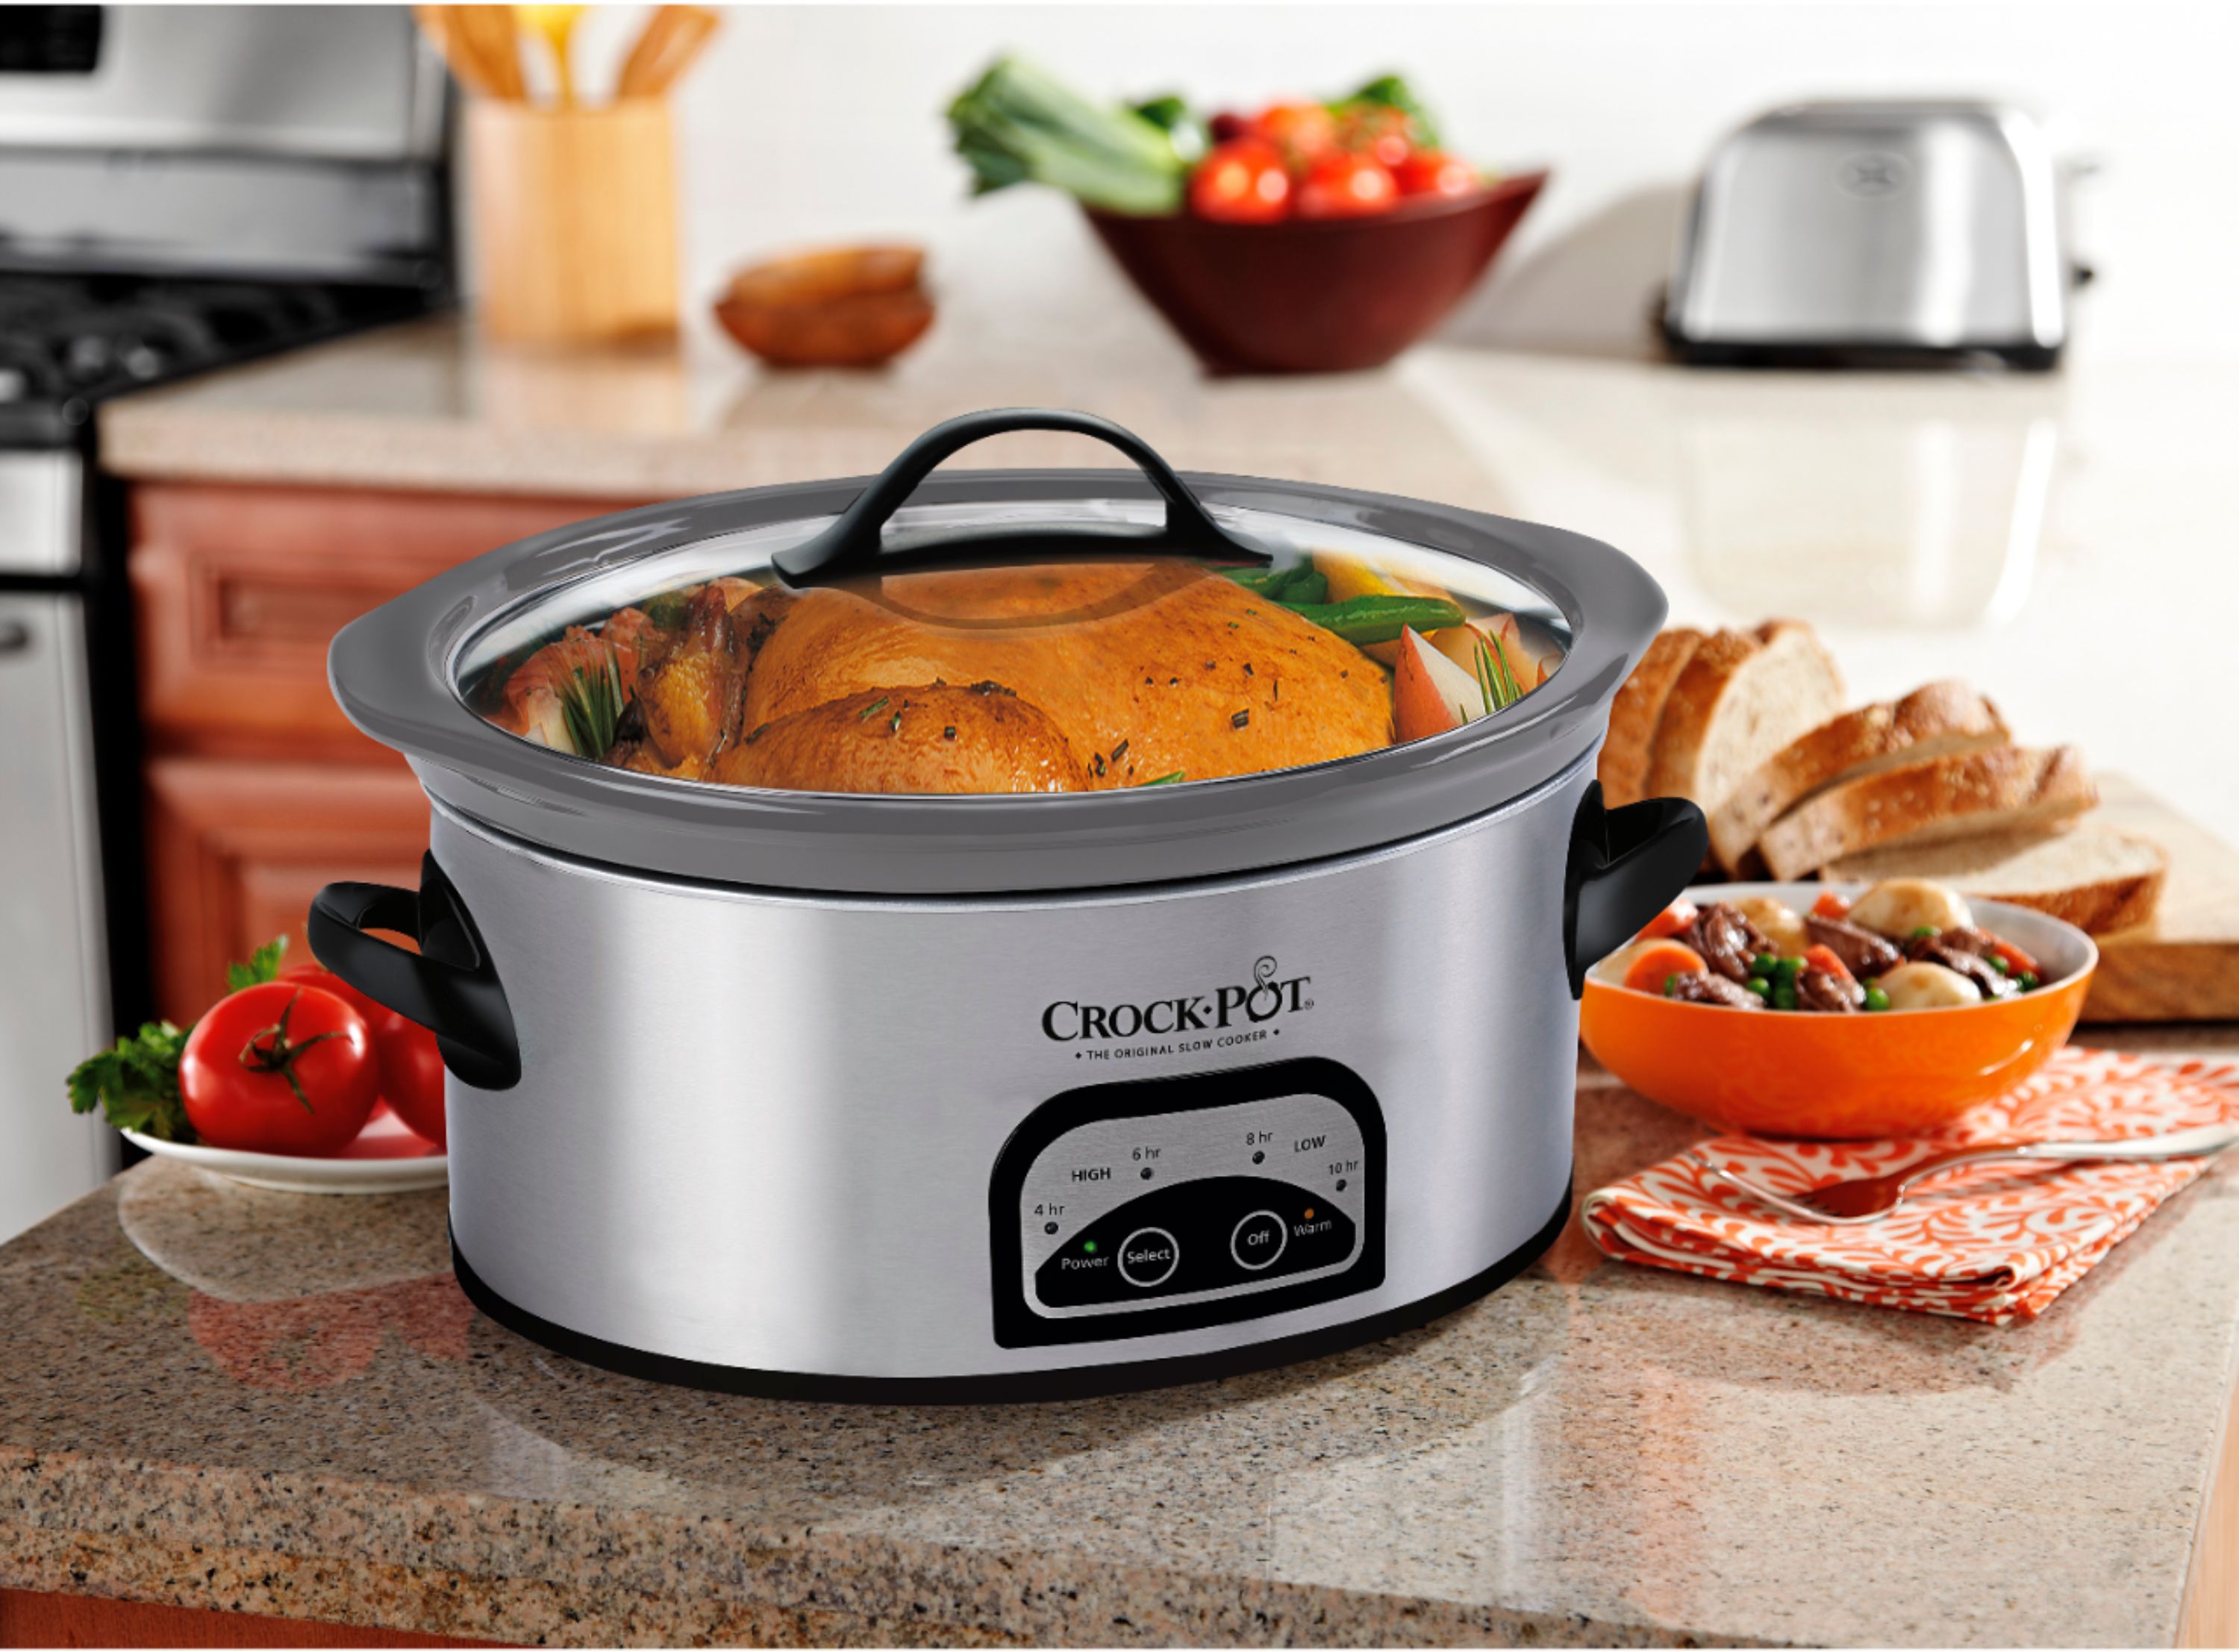 Crock-Pot The Original Slow Cooker, 5-Quart, Stainless Steel